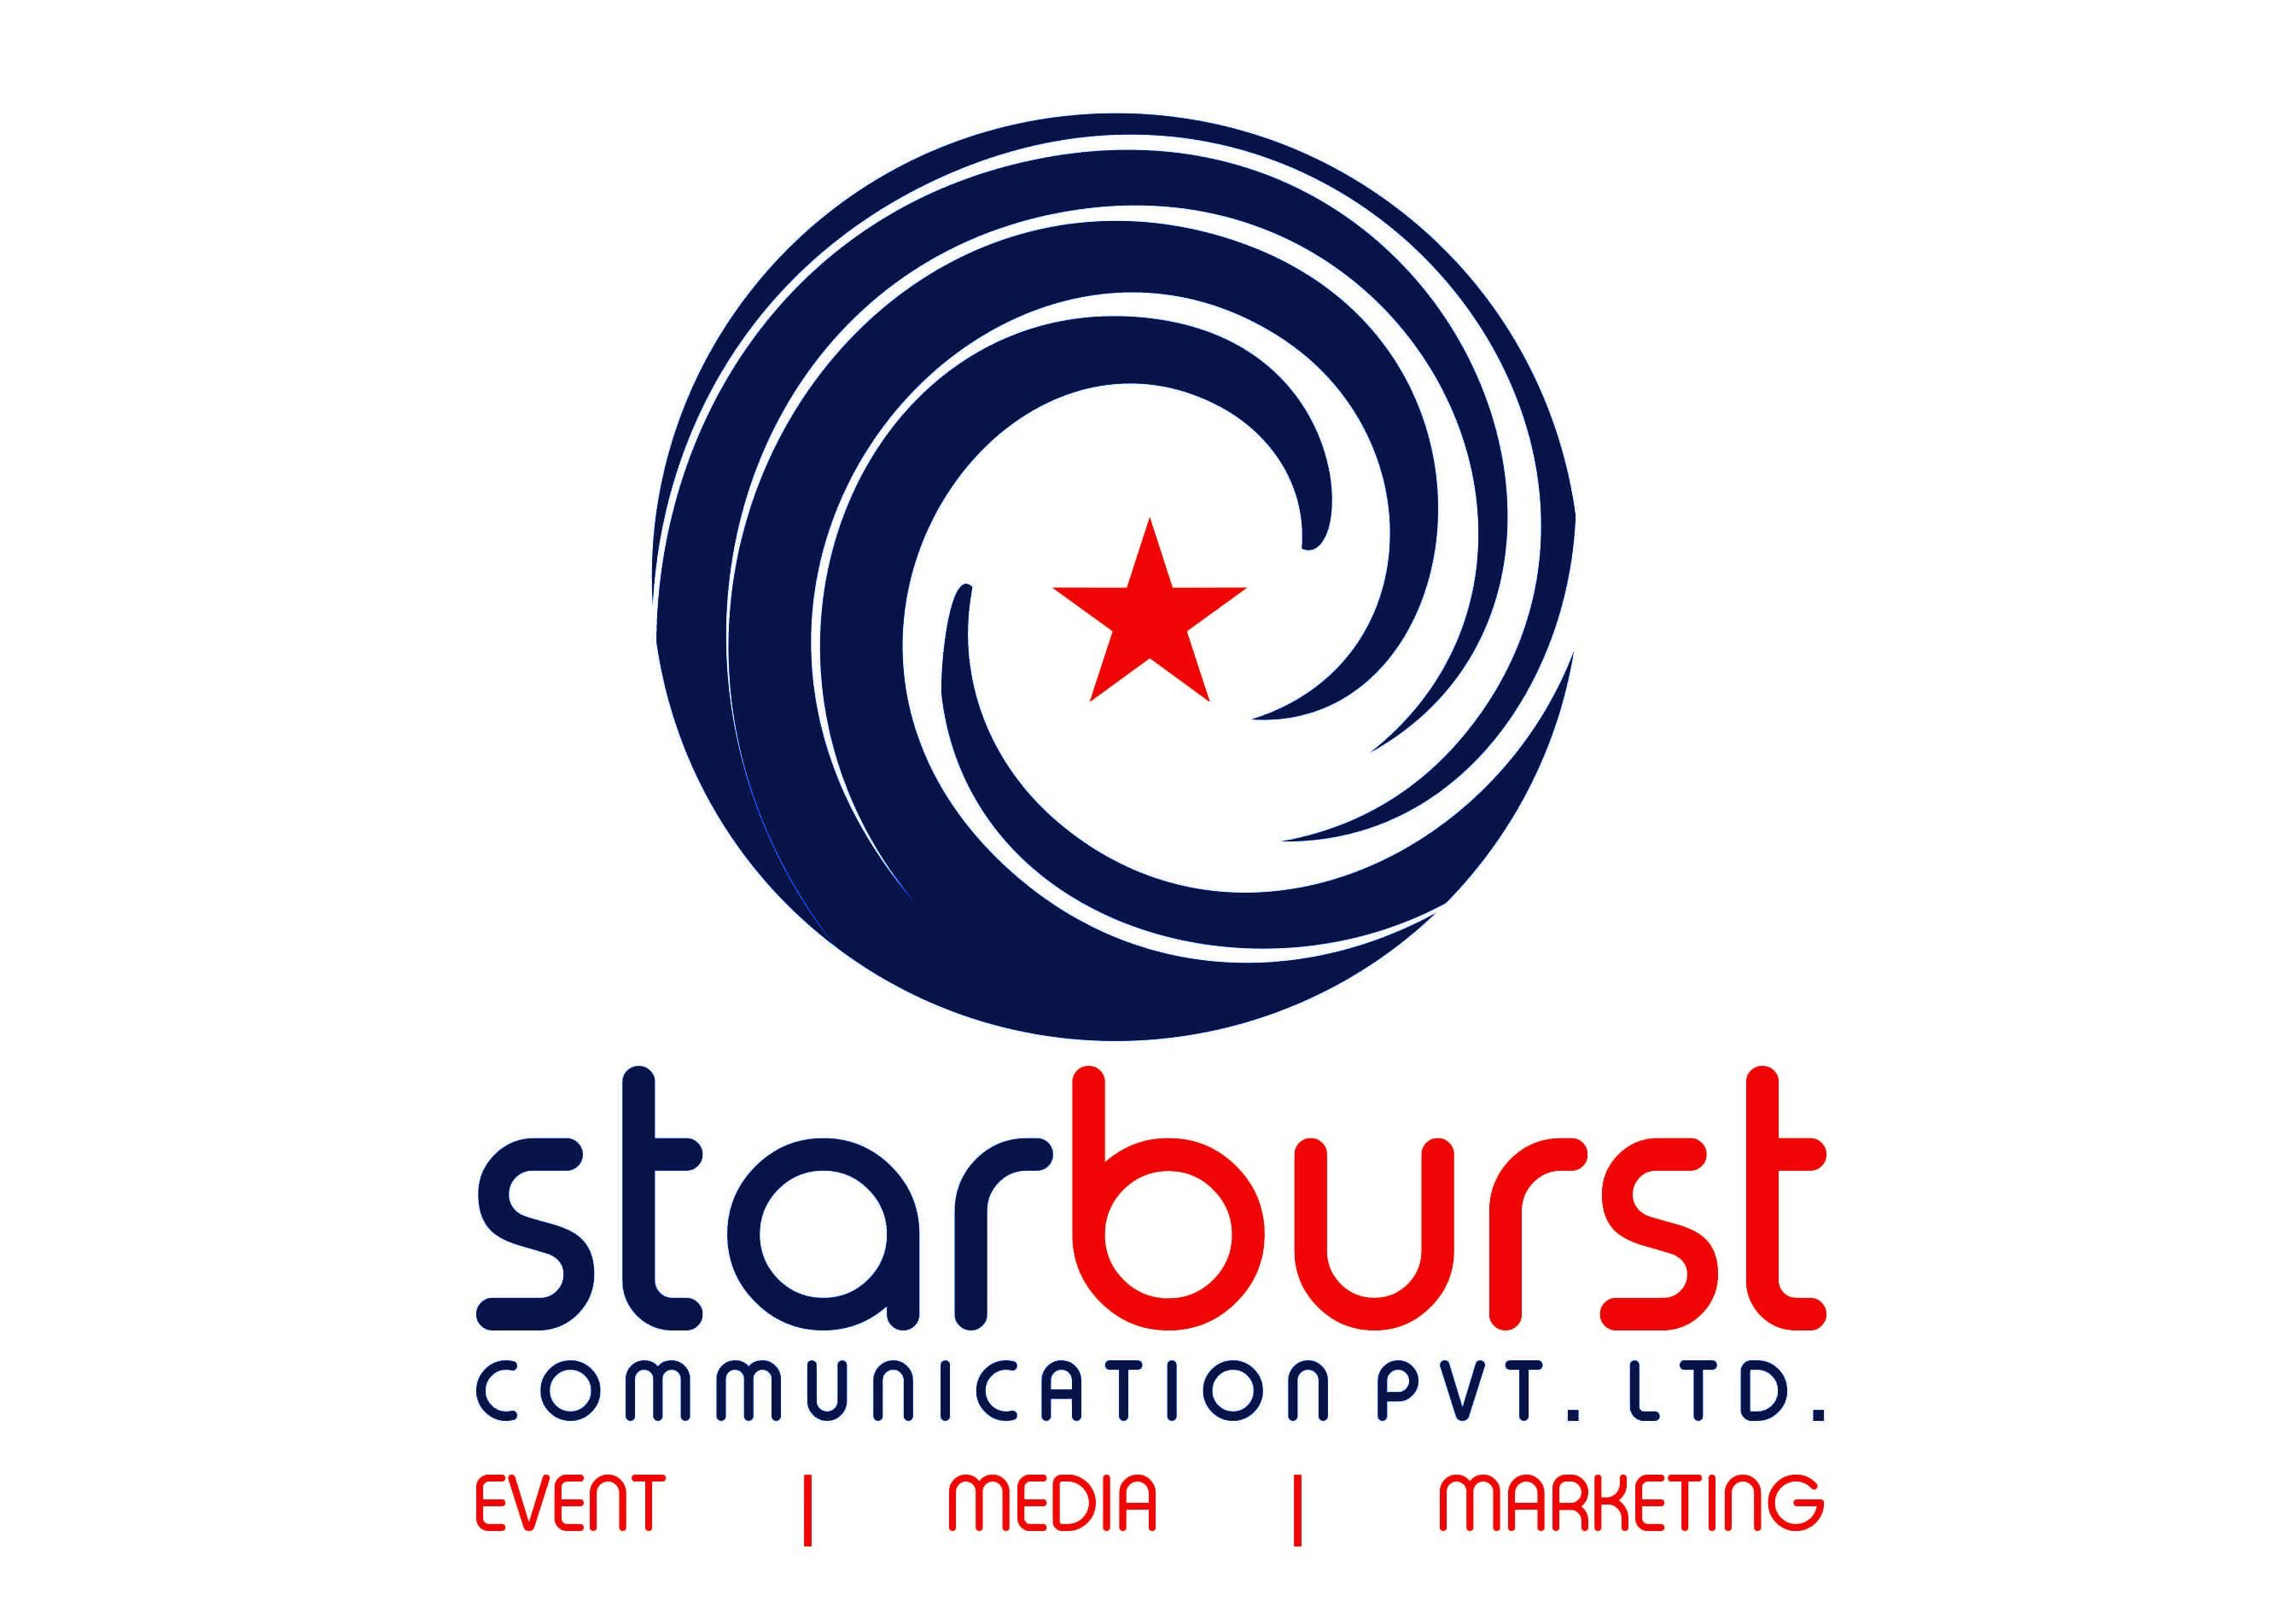 Starburst Communication